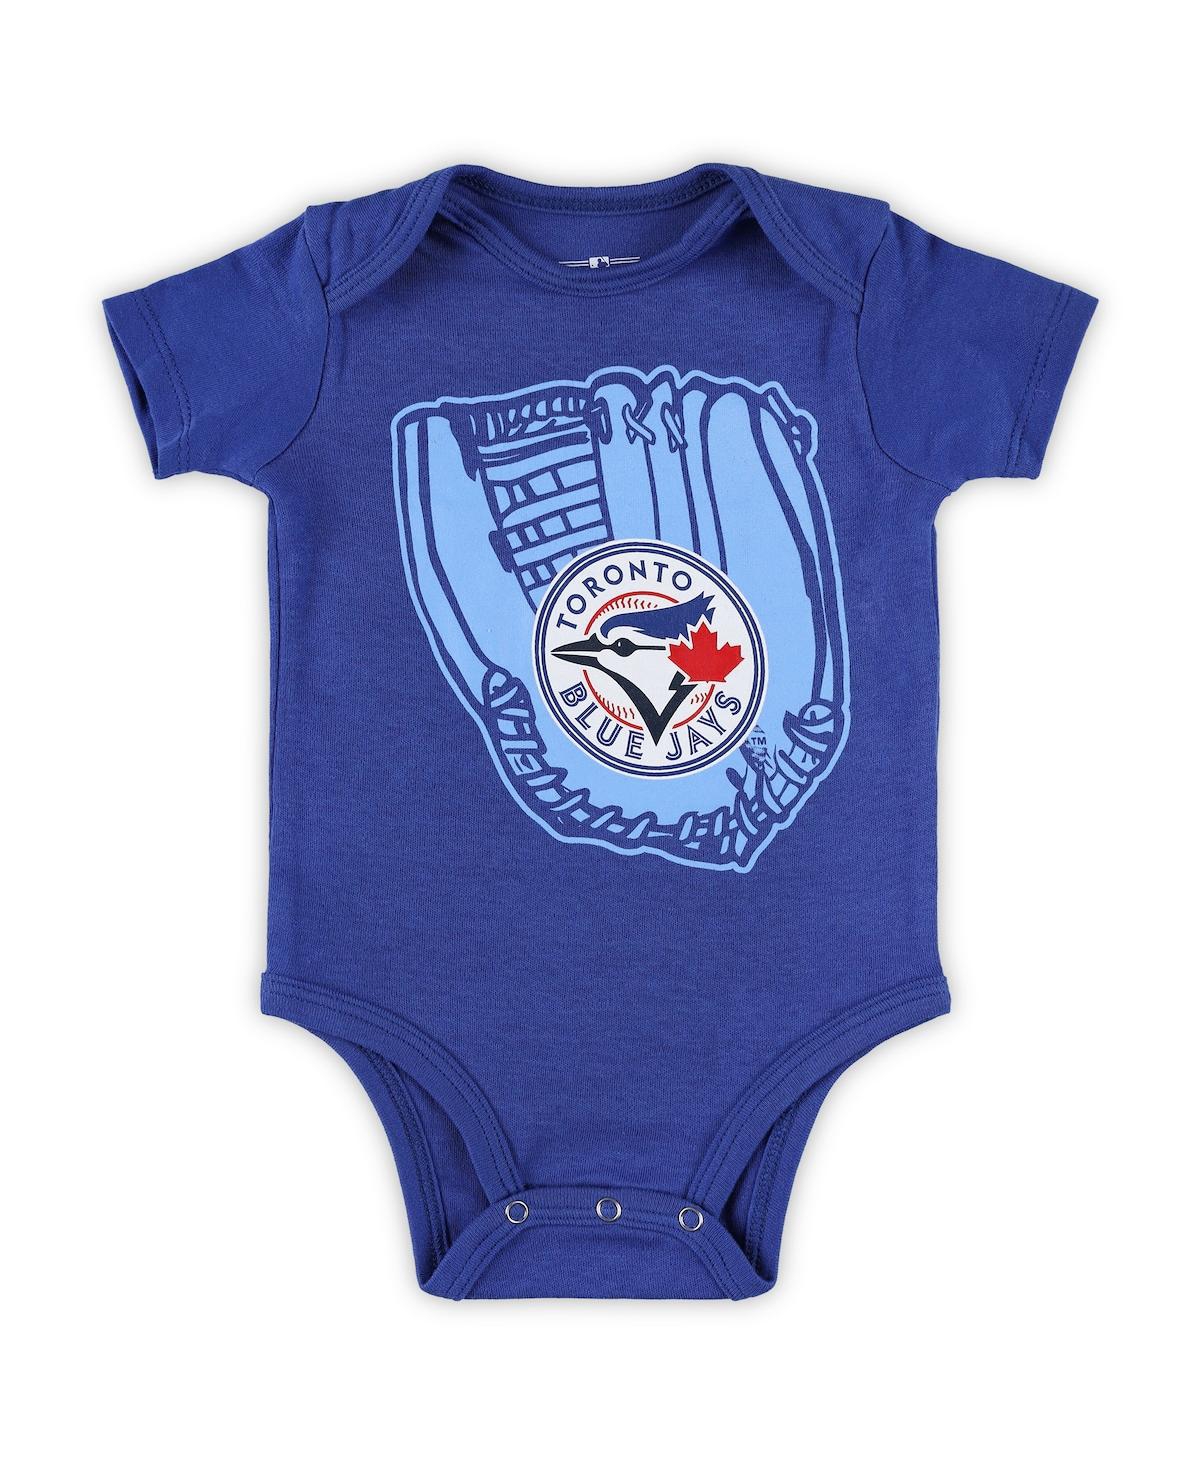 Toronto Blue Jays Baby Apparel, Blue Jays Infant Jerseys, Toddler